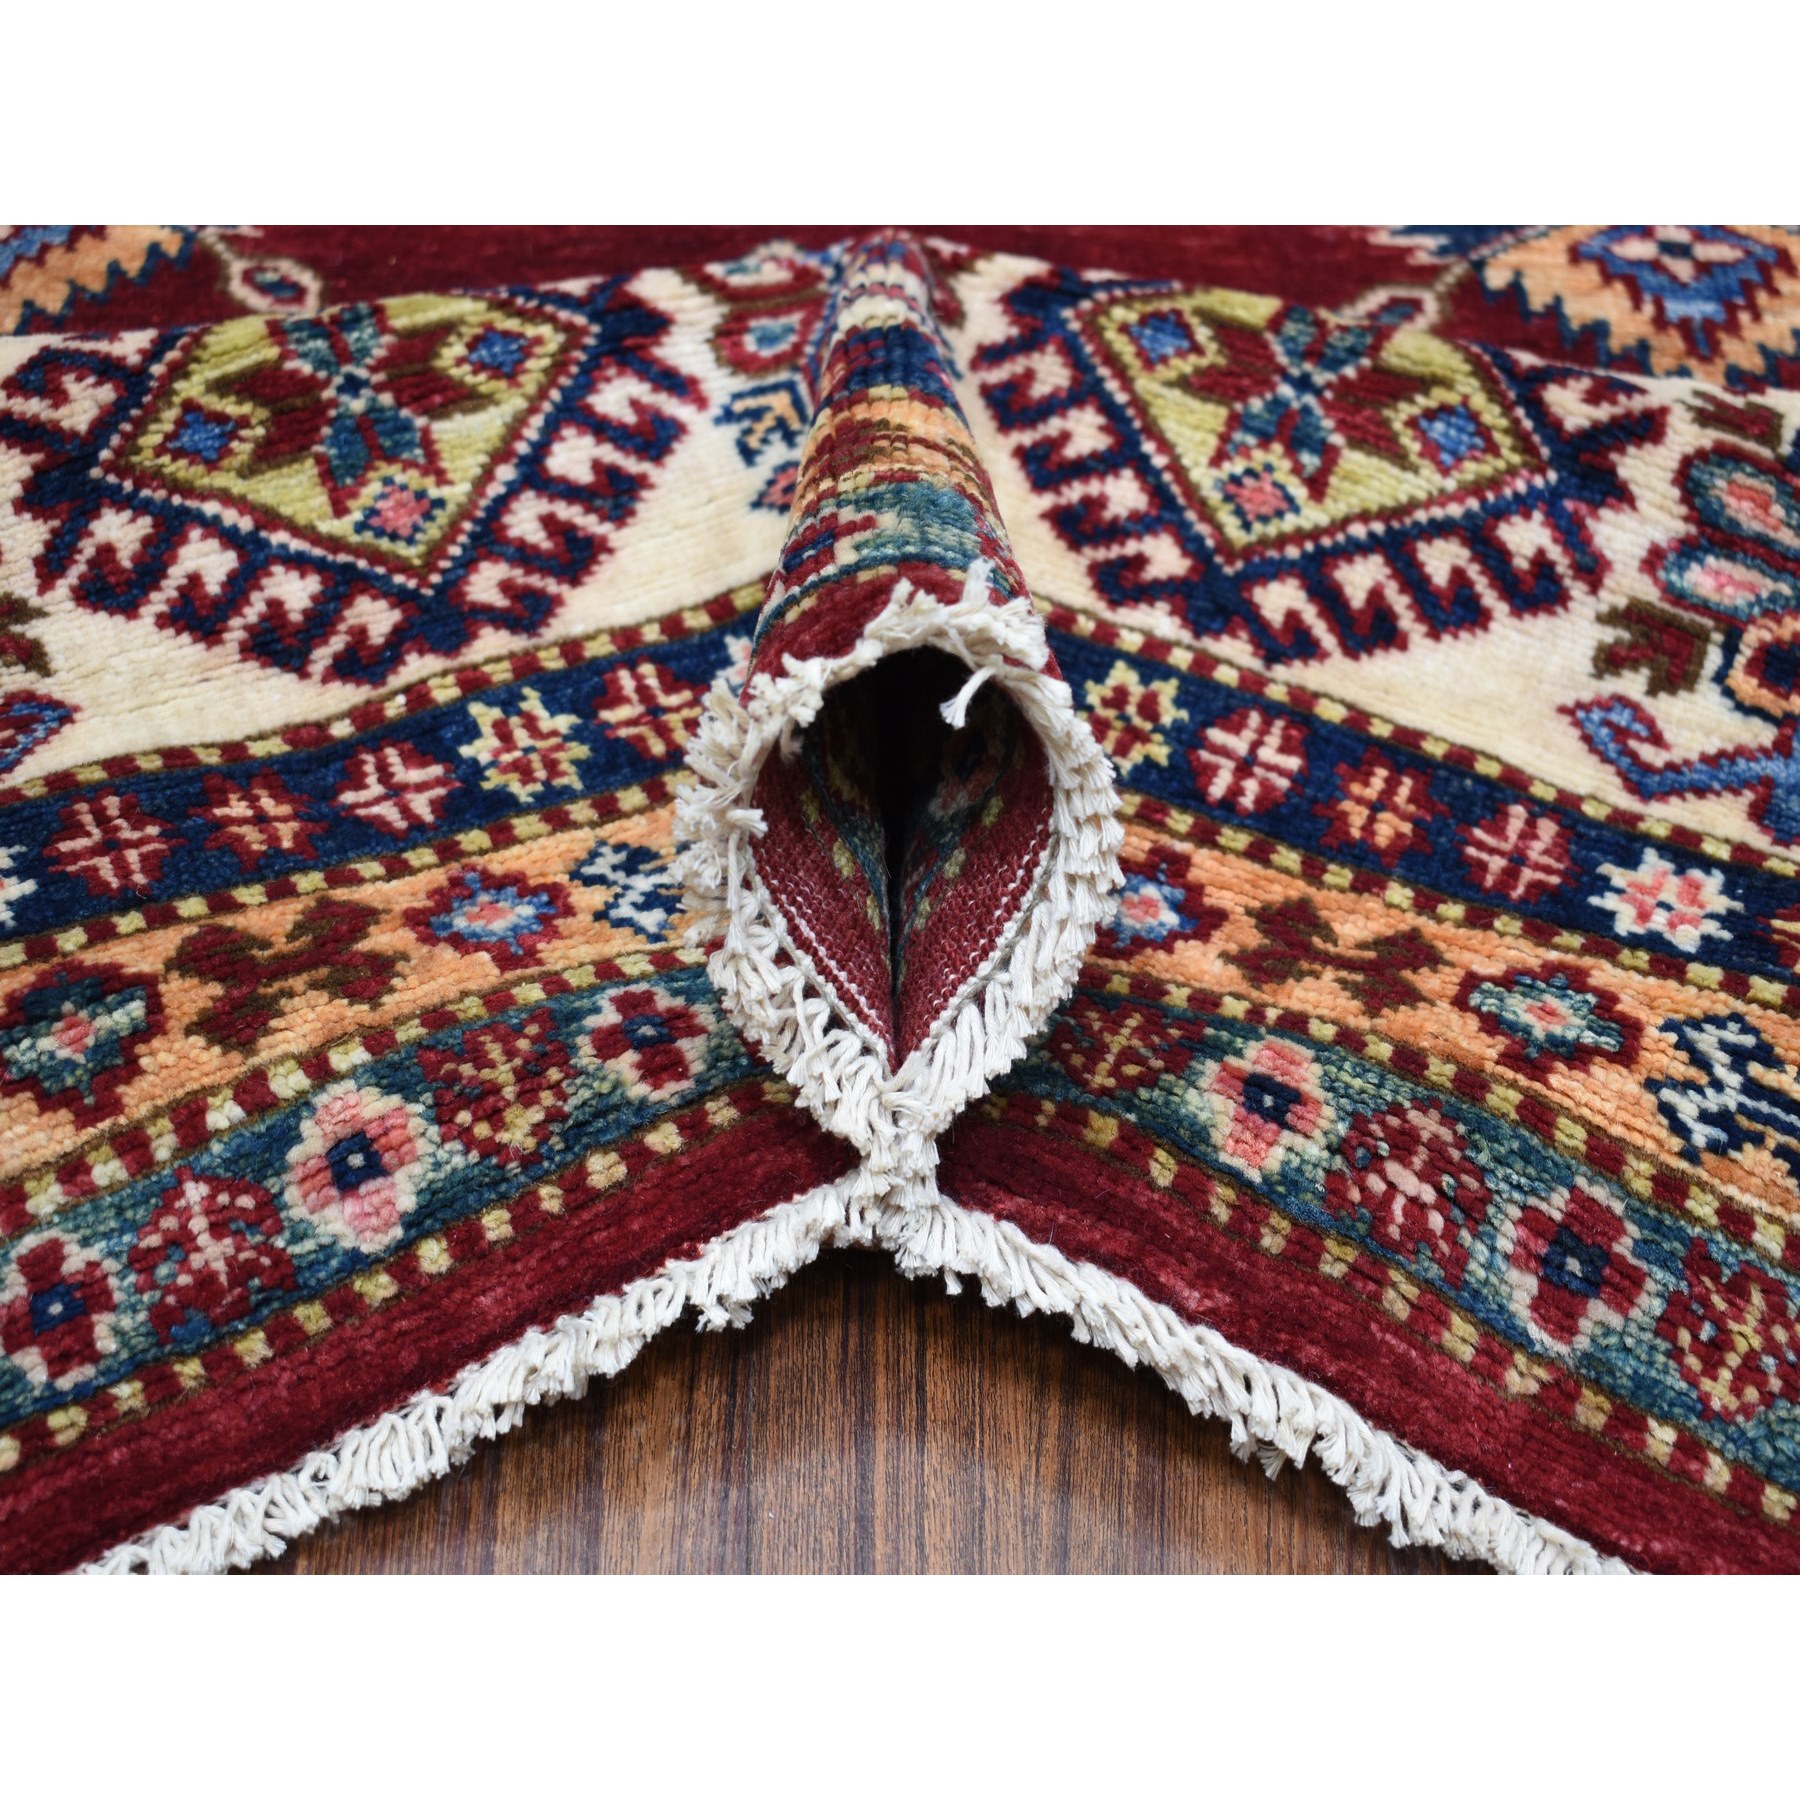 8'1"x10' Deep Red Soft Afghan Wool Hand Woven Super Kazak with Geometric Design Oriental Rug 